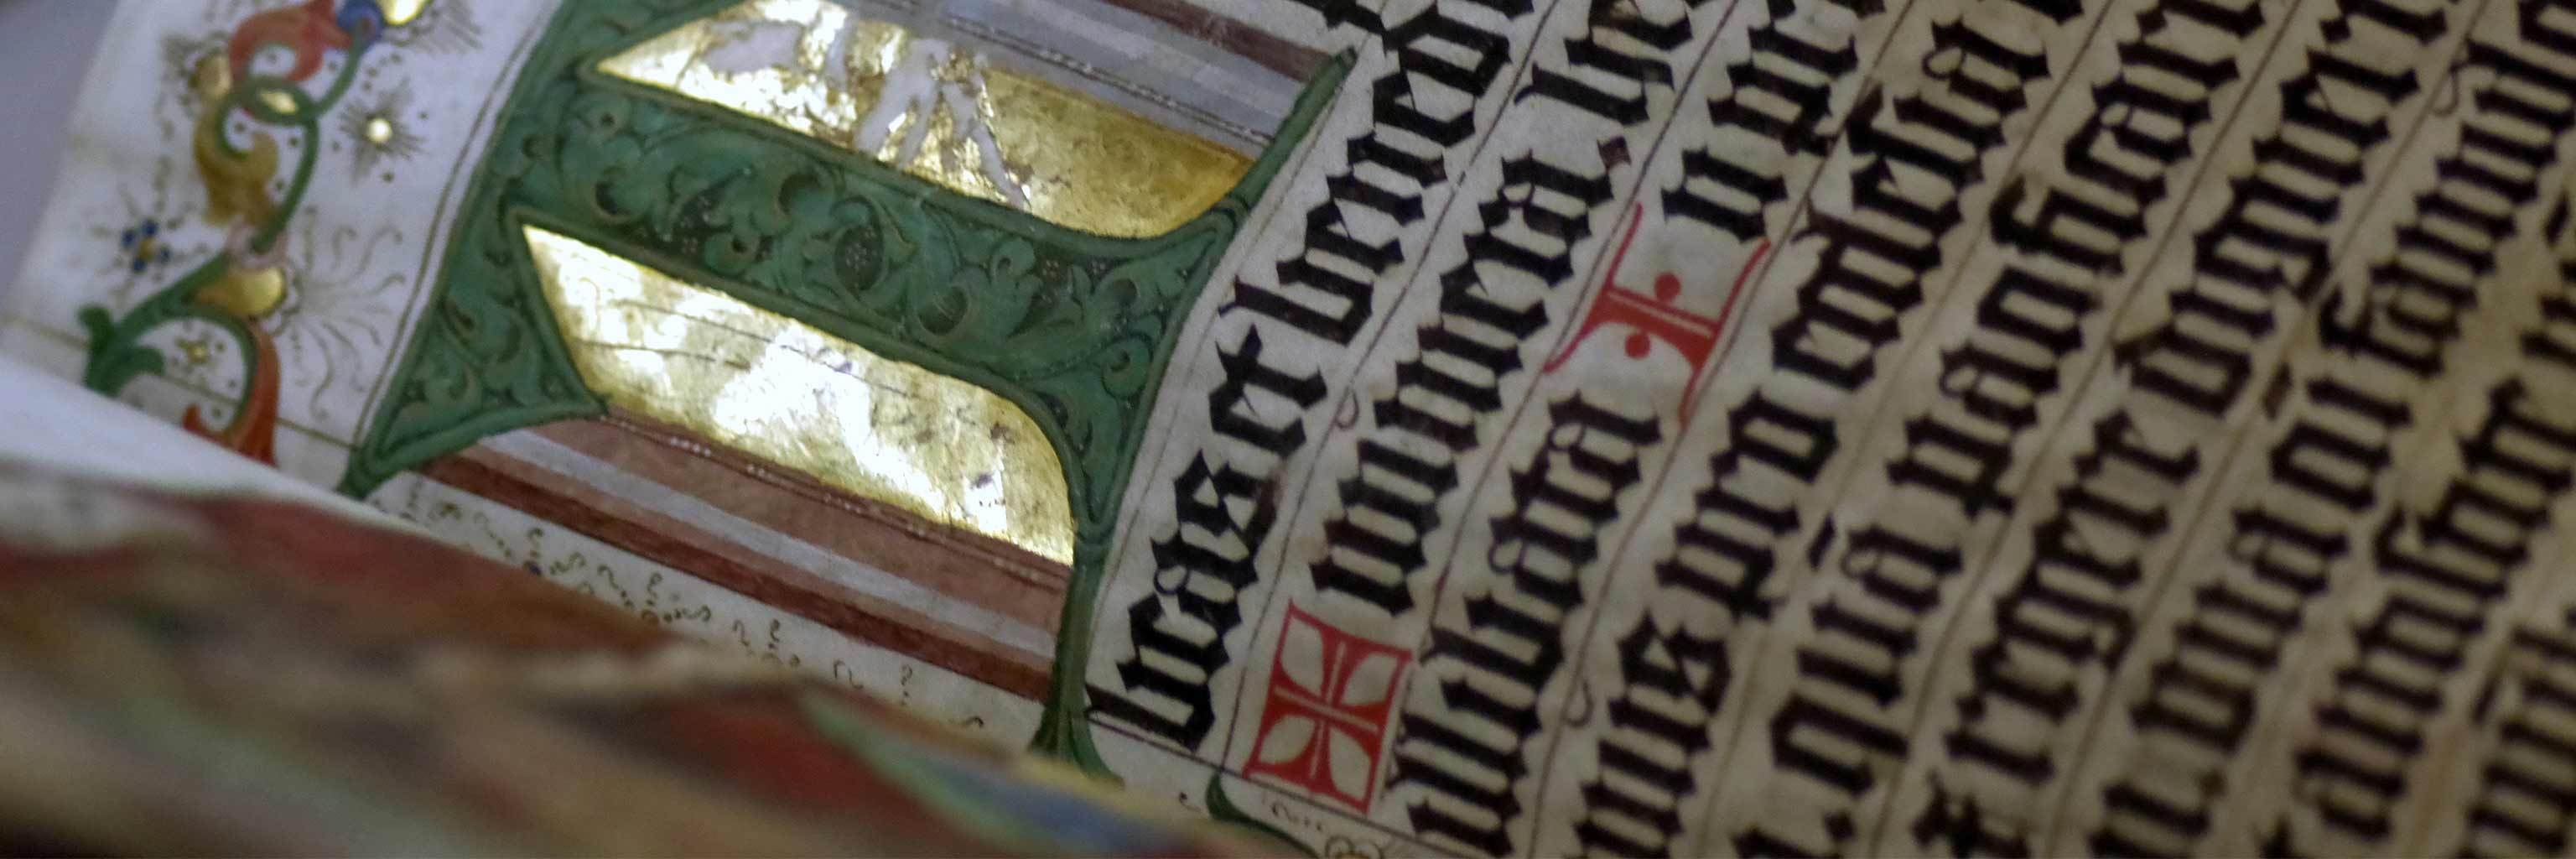 Close up of medieval script.